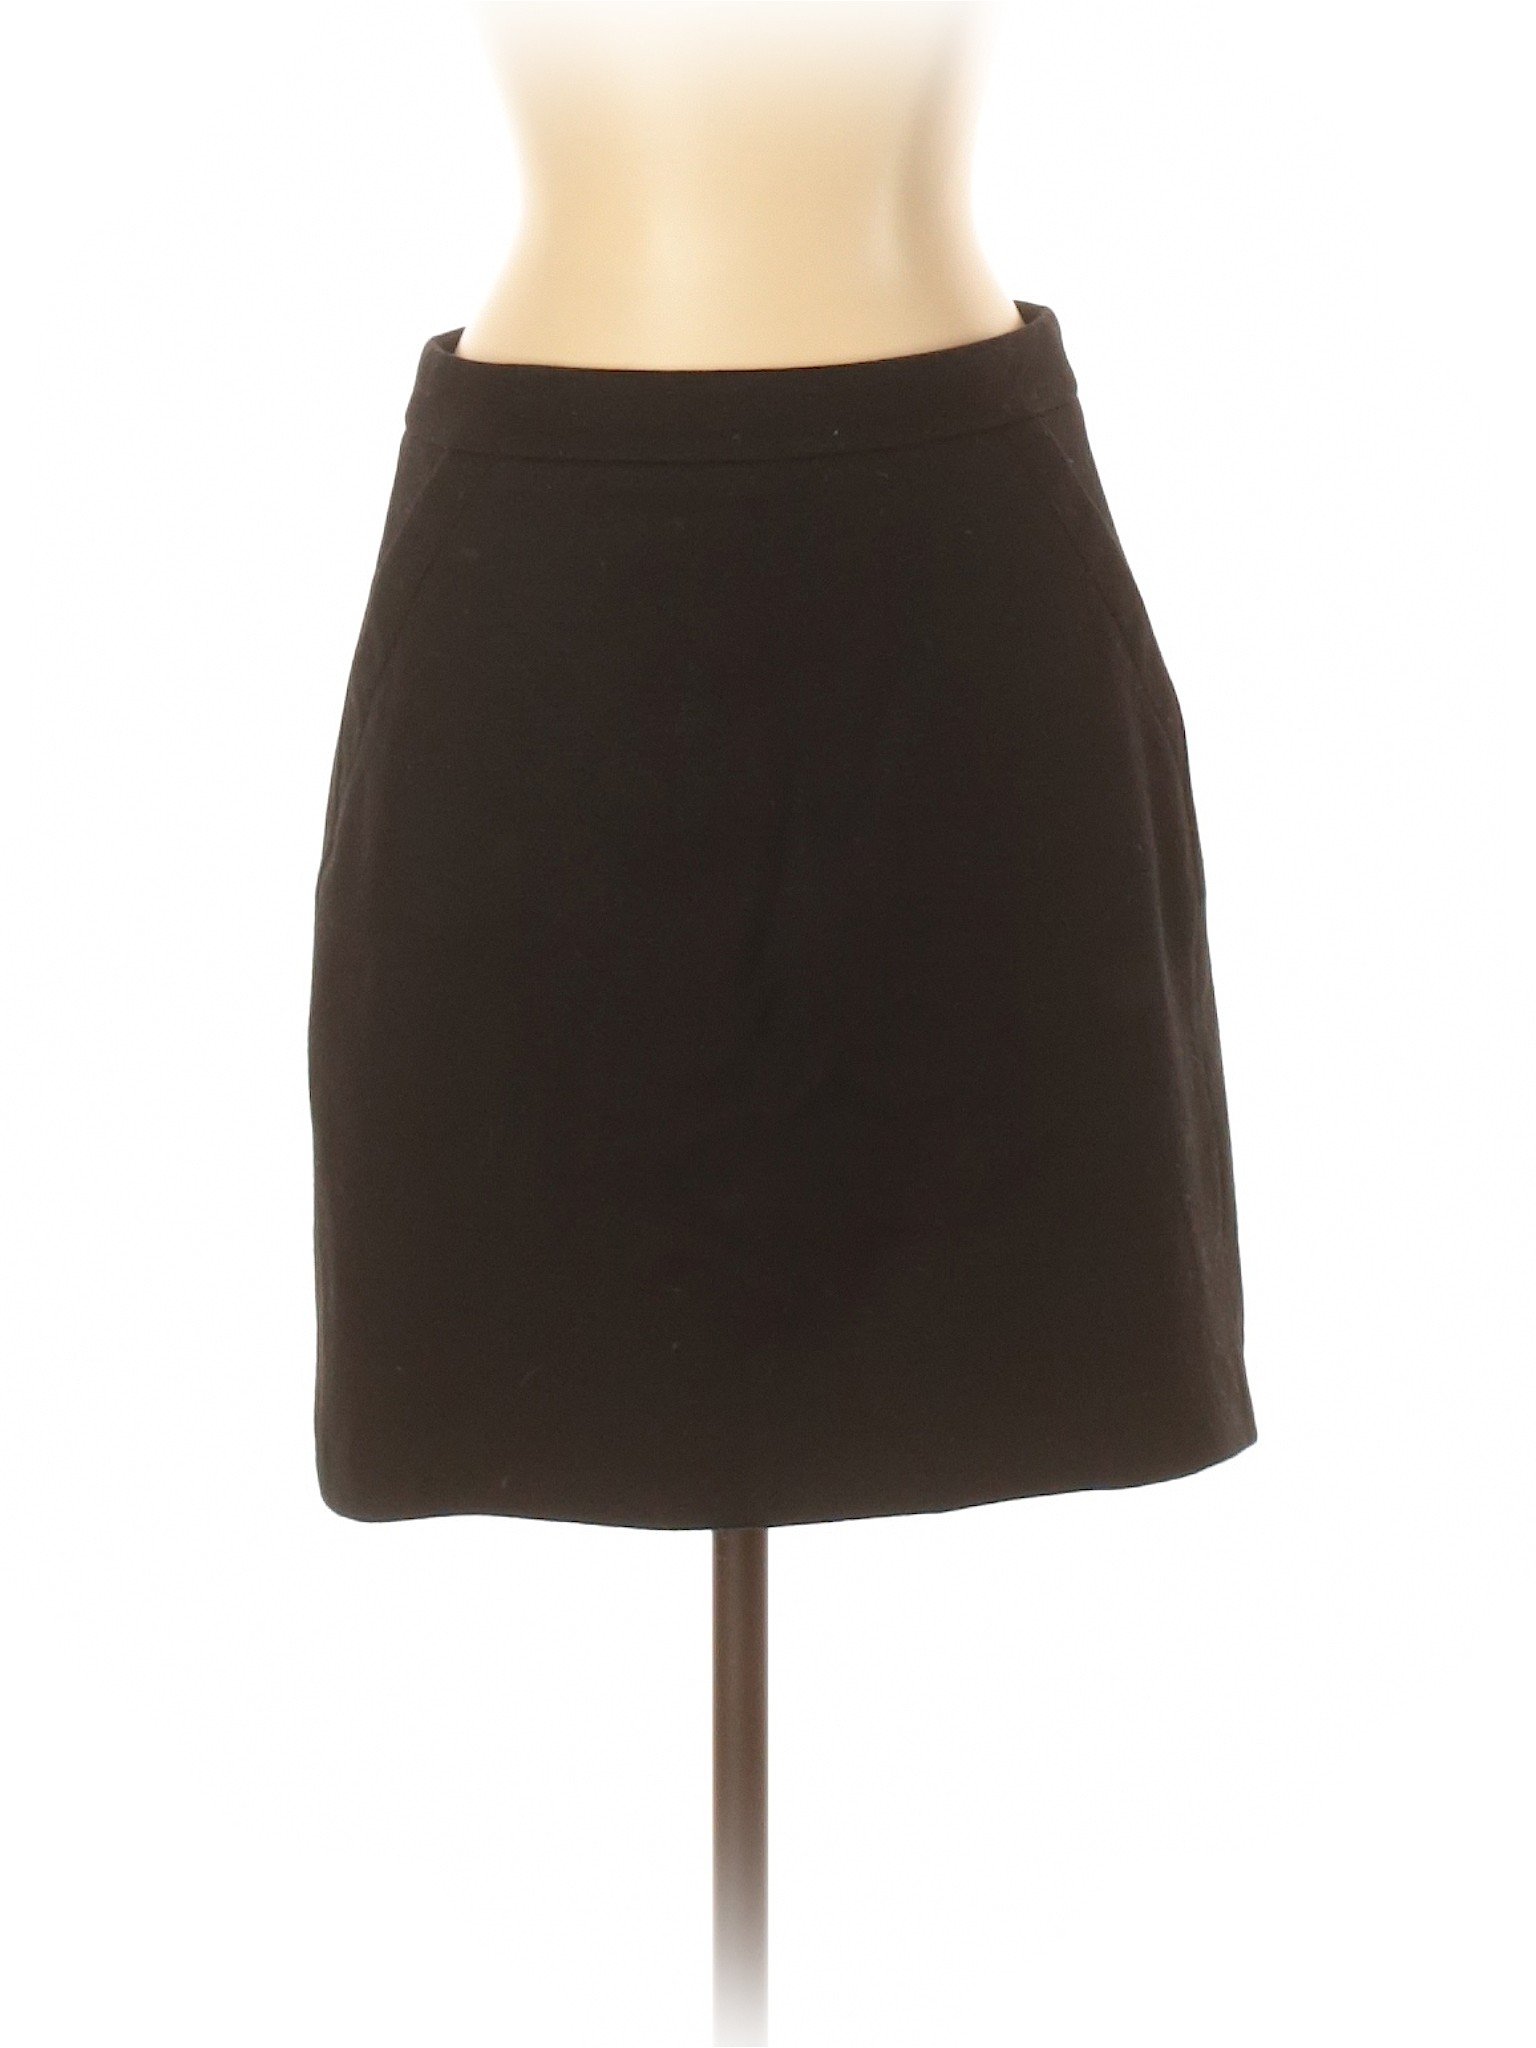 Judith & Charles Women Black Wool Skirt 2 | eBay